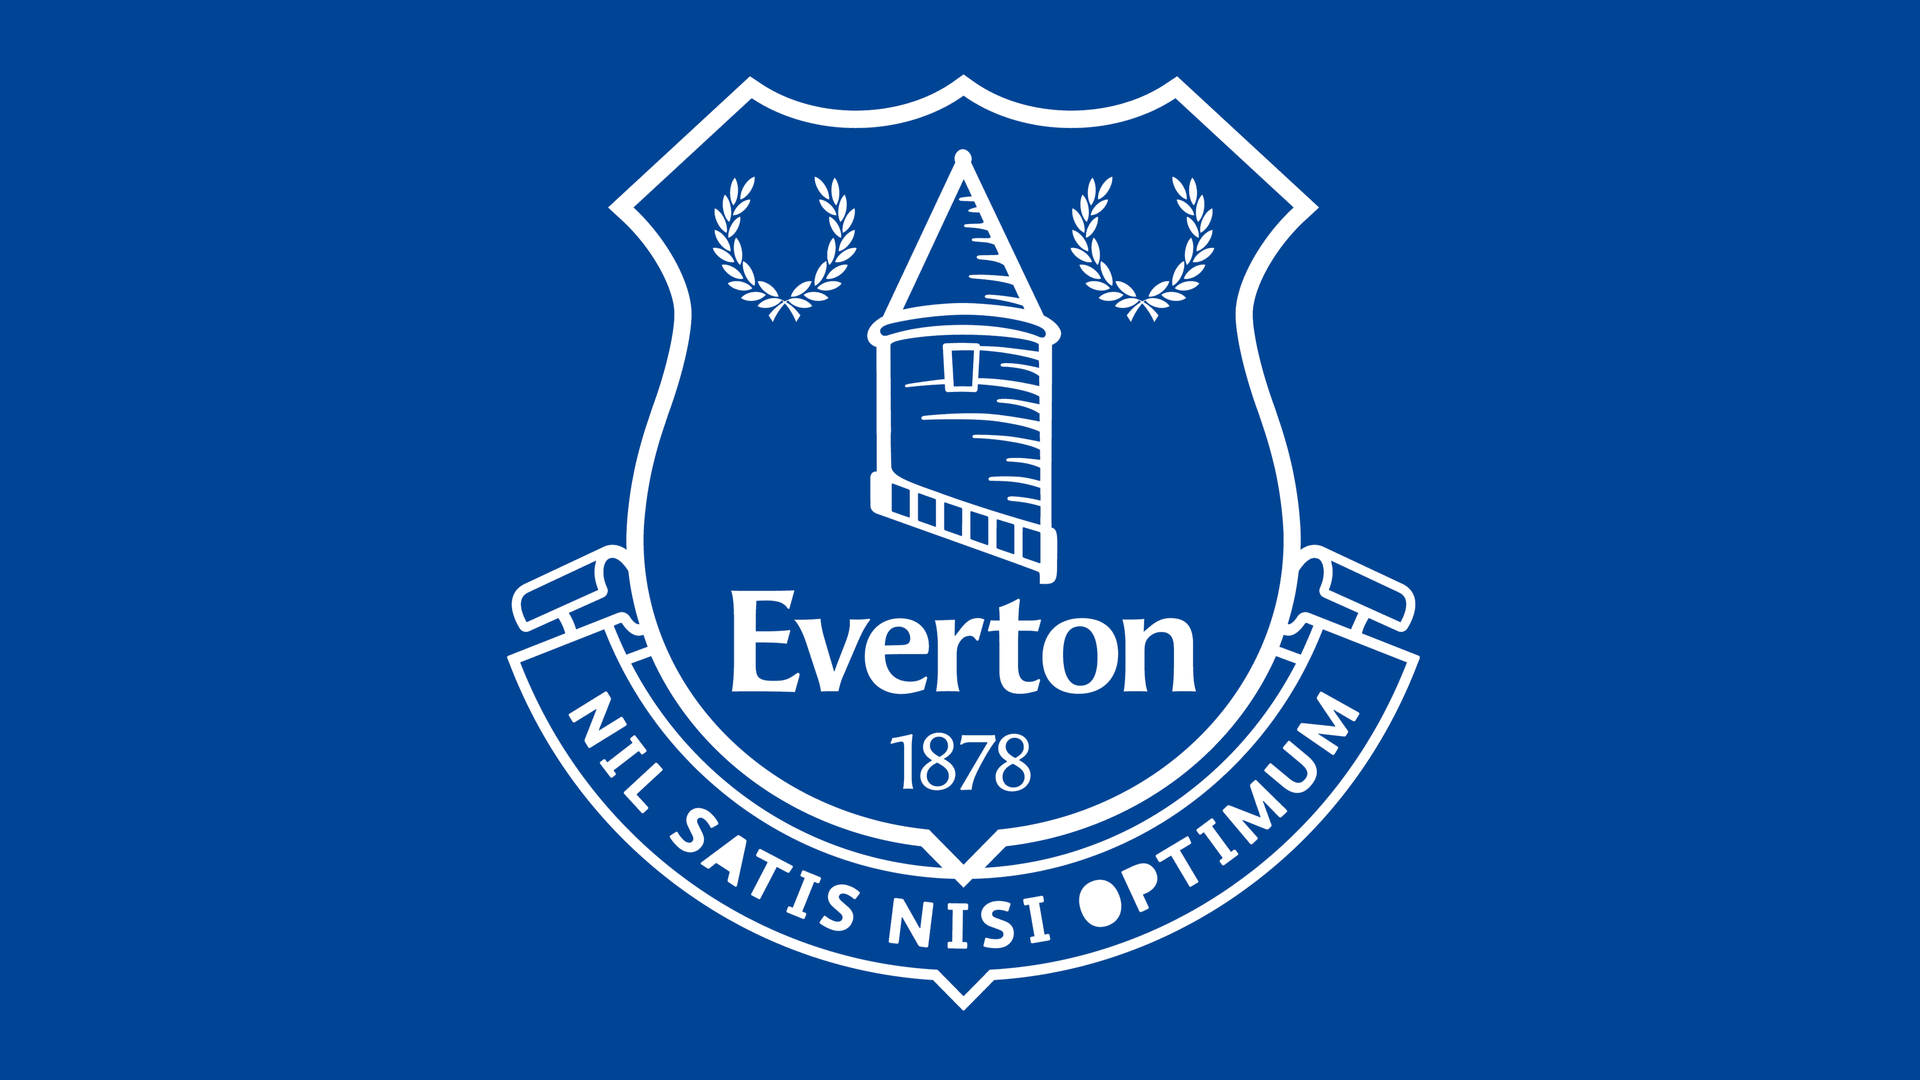 Everton F.c Emblem In Blue